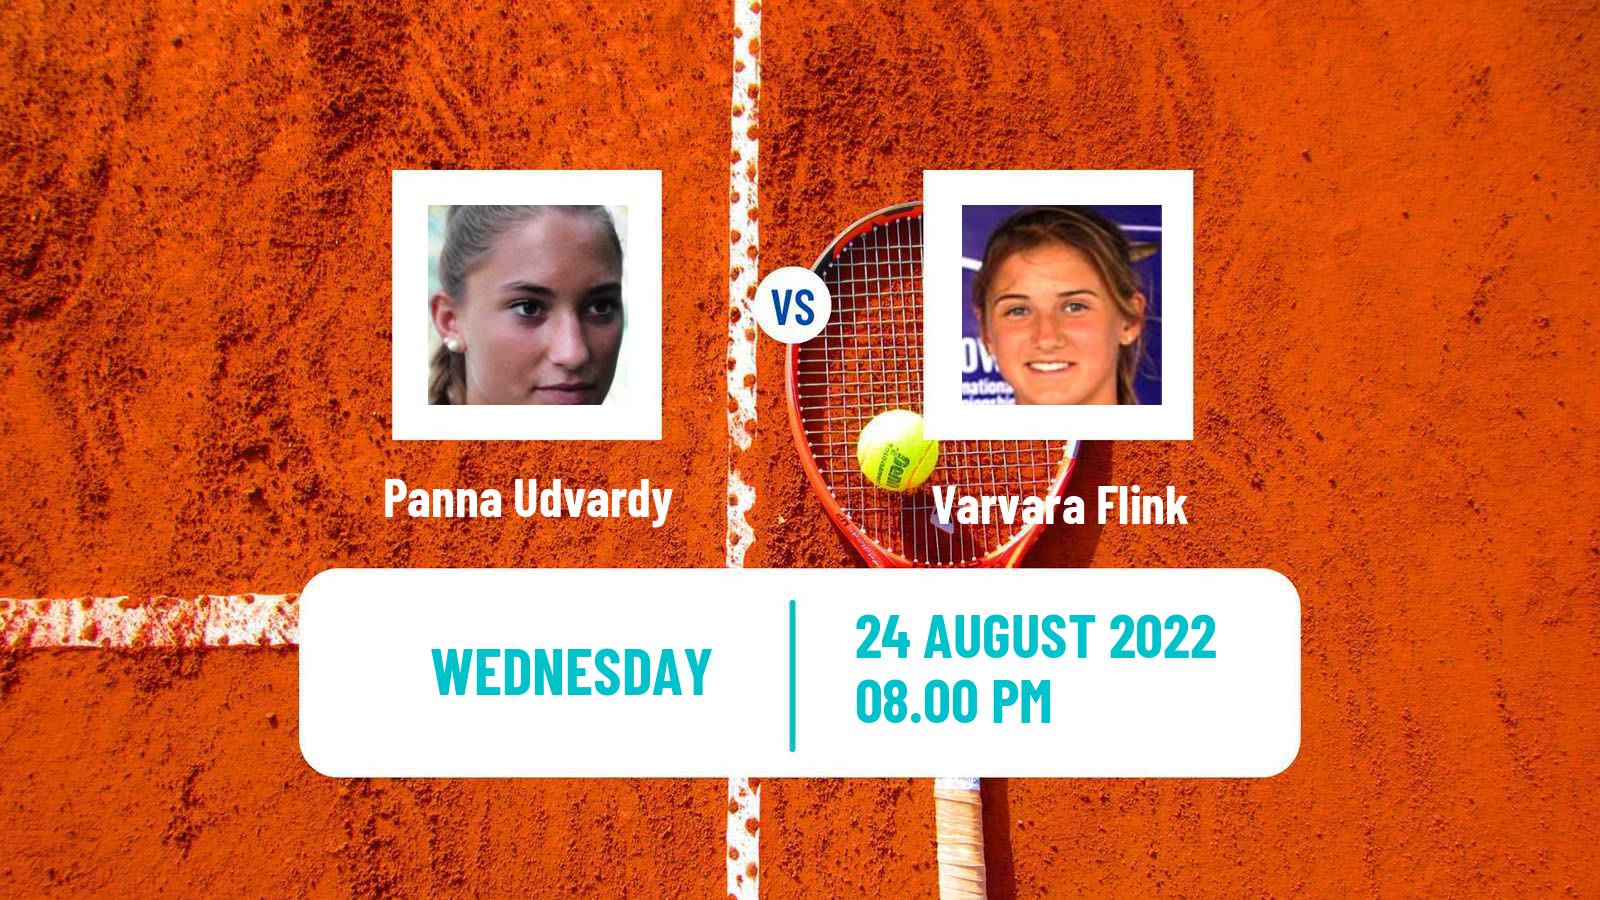 Tennis WTA US Open Panna Udvardy - Varvara Flink